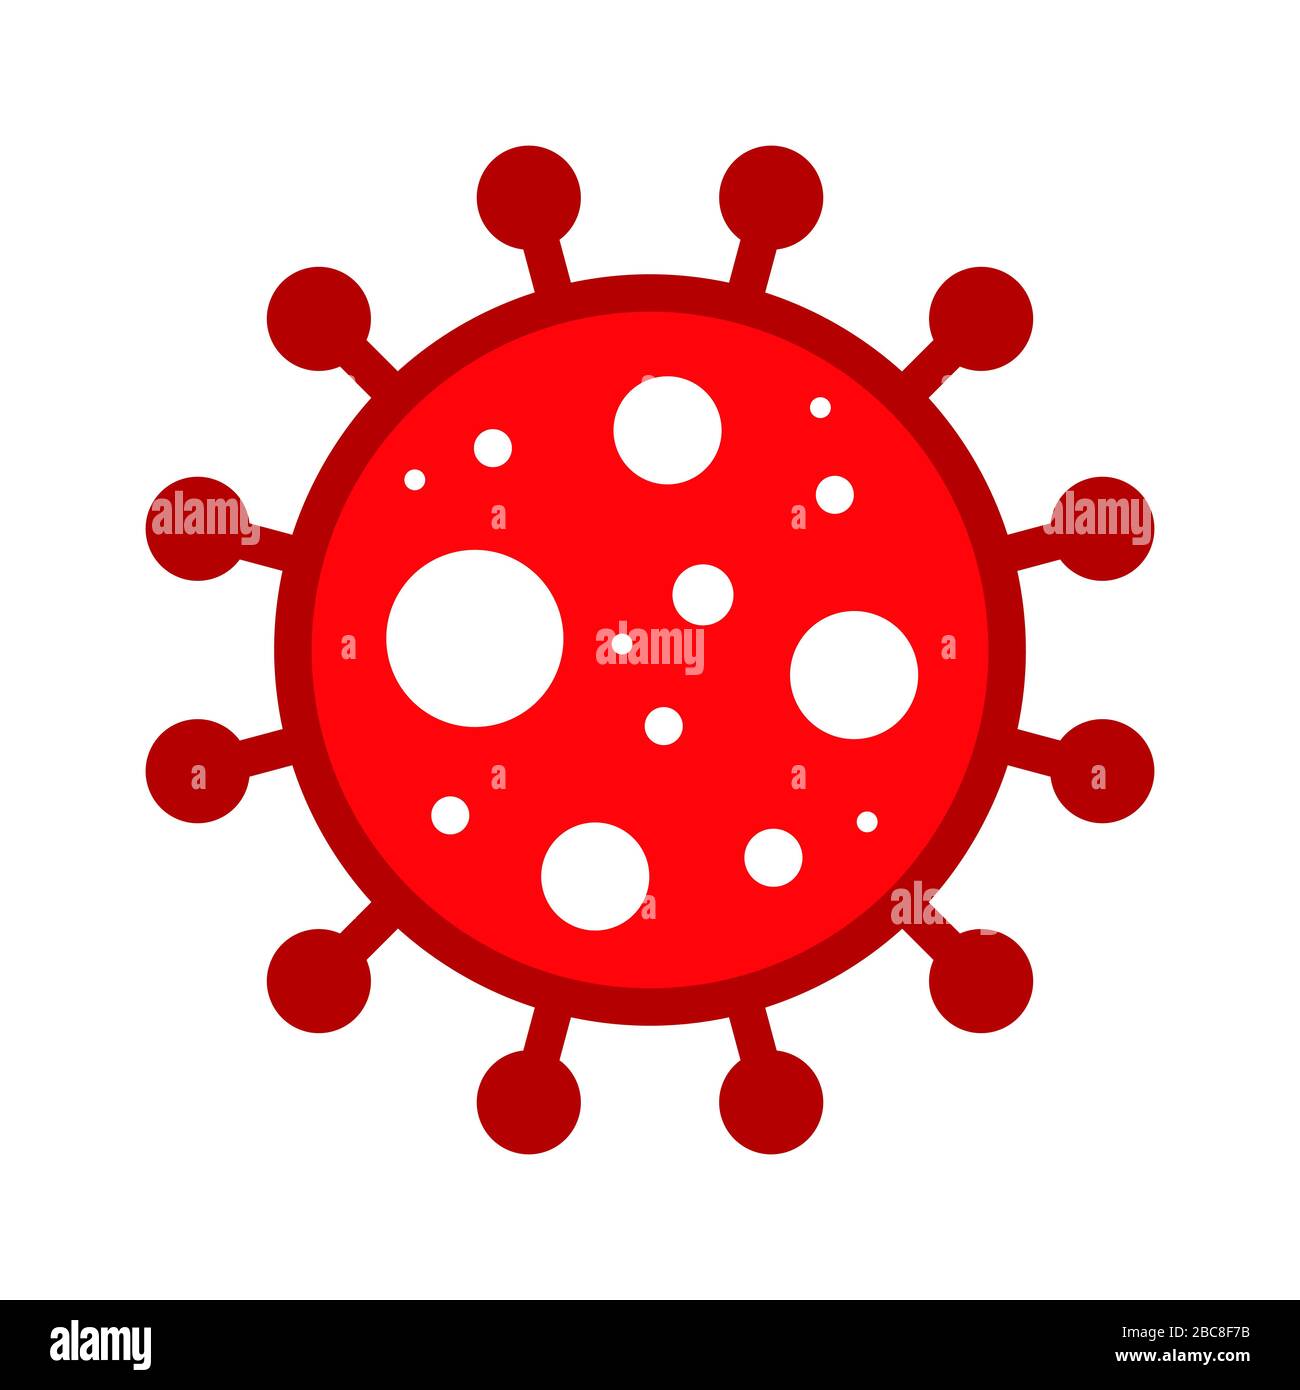 Wuhan Corona Virus, Covid-19, nCOV, MERS-CoV Novel Coronavirus Cell Stamp. Covid 19 Red Vector. Epidemic Warning Symbol or Sign, Risk Zone Sticker. Stock Vector